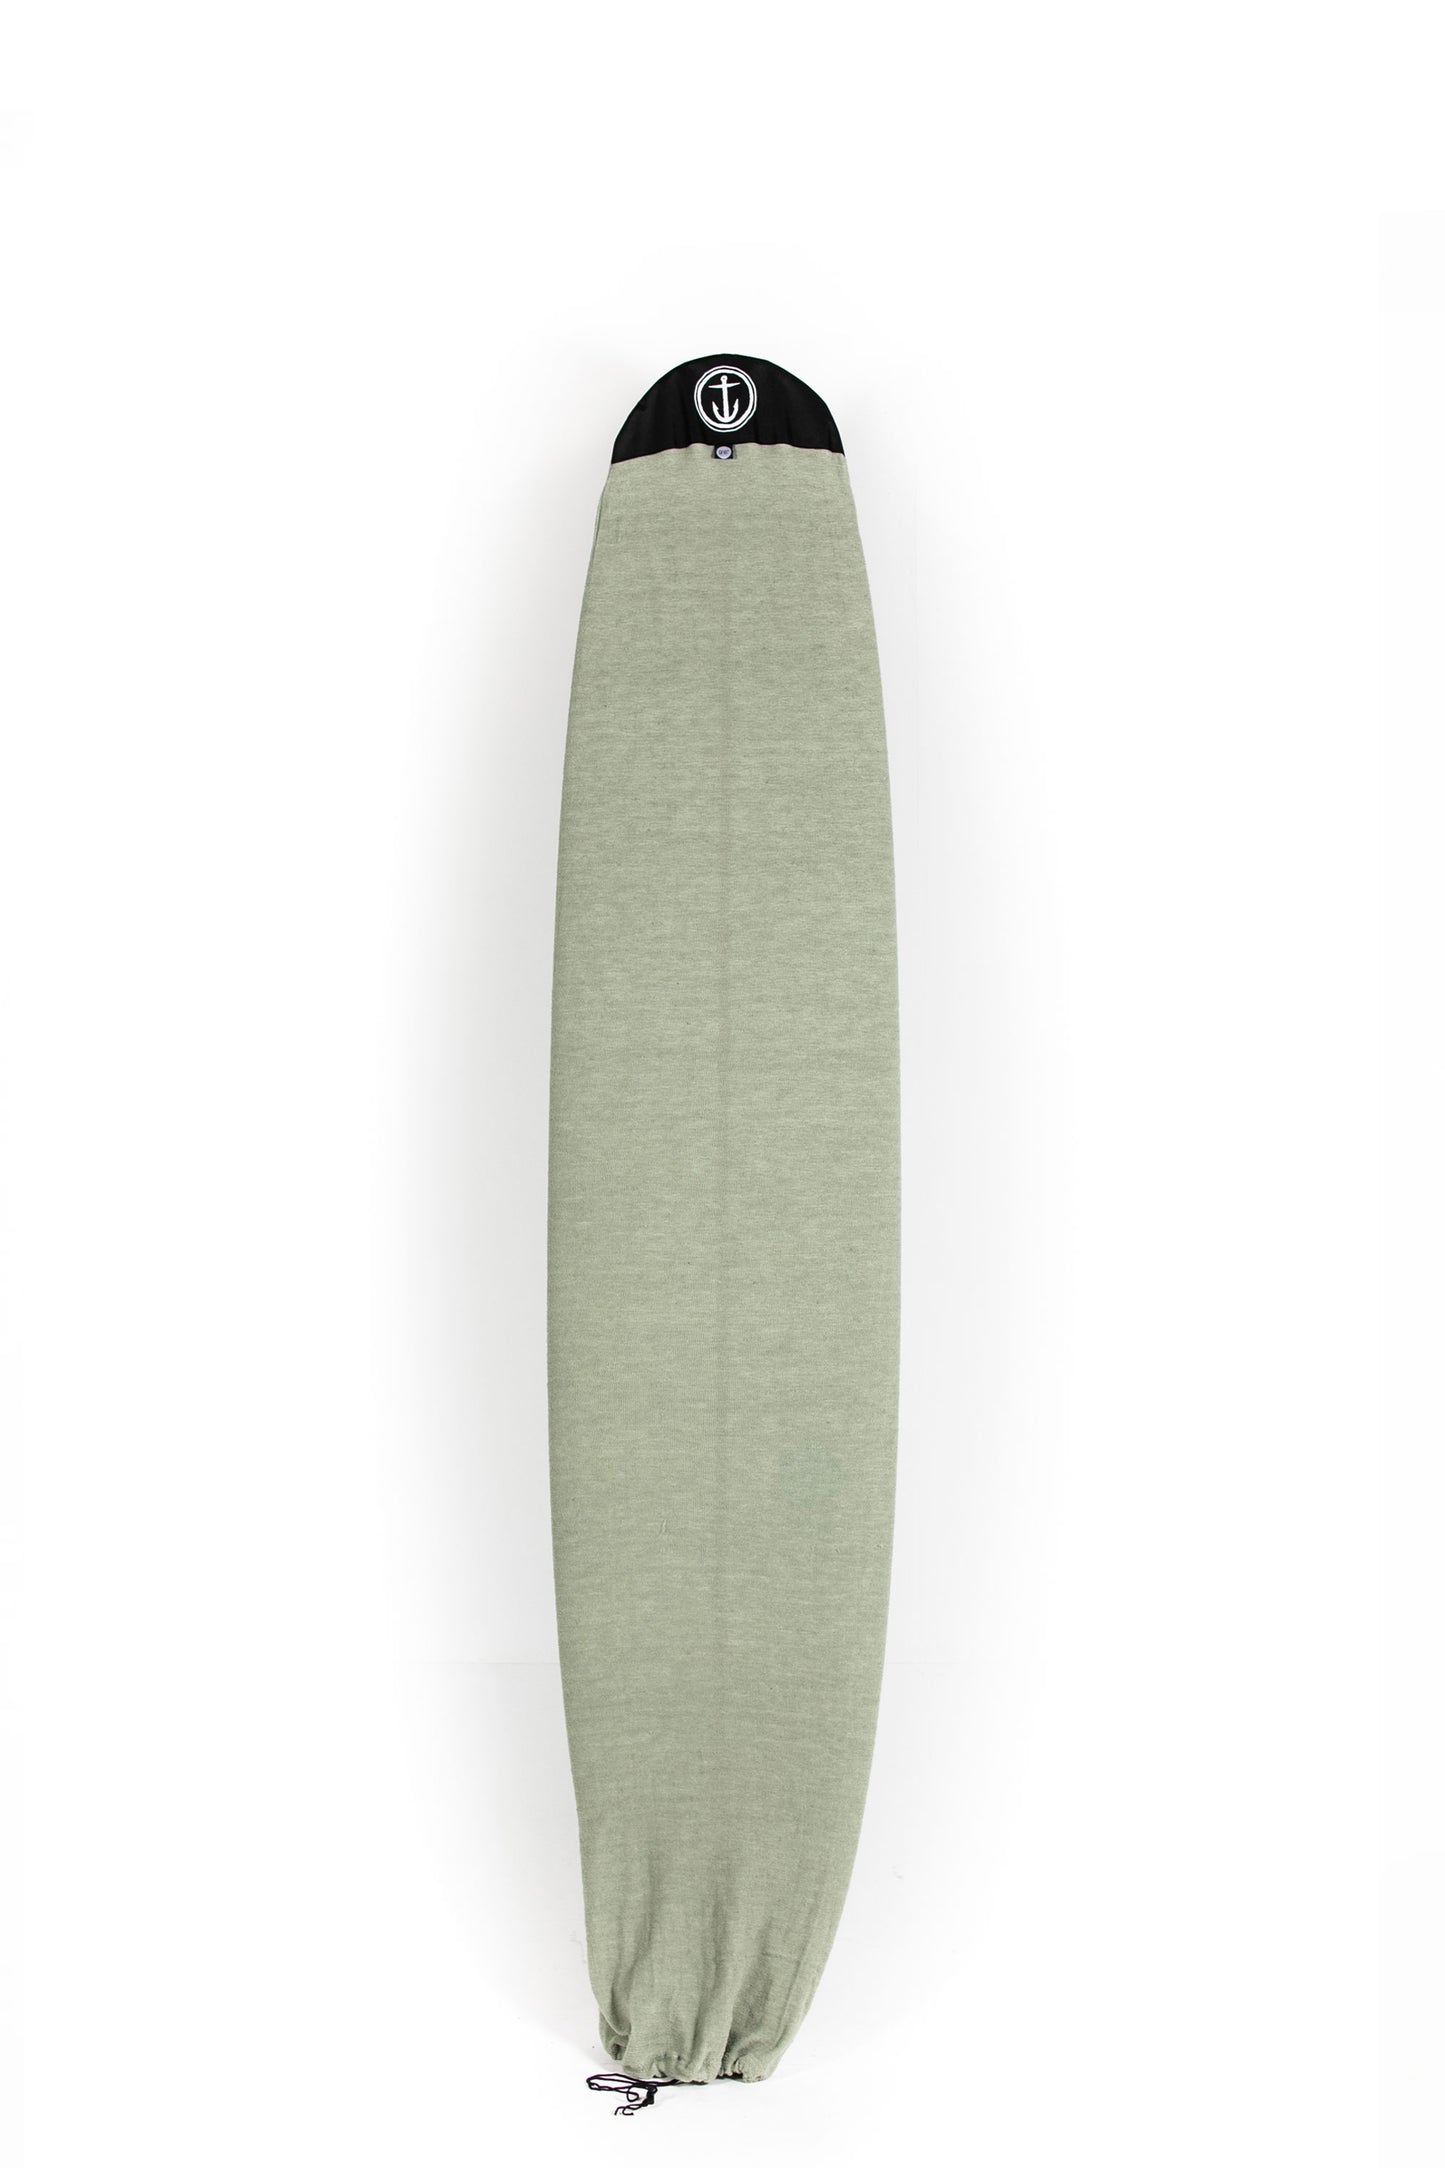 pukas-surf-shop-captain-fin-boardbag-sock-longboard-grey-7-6